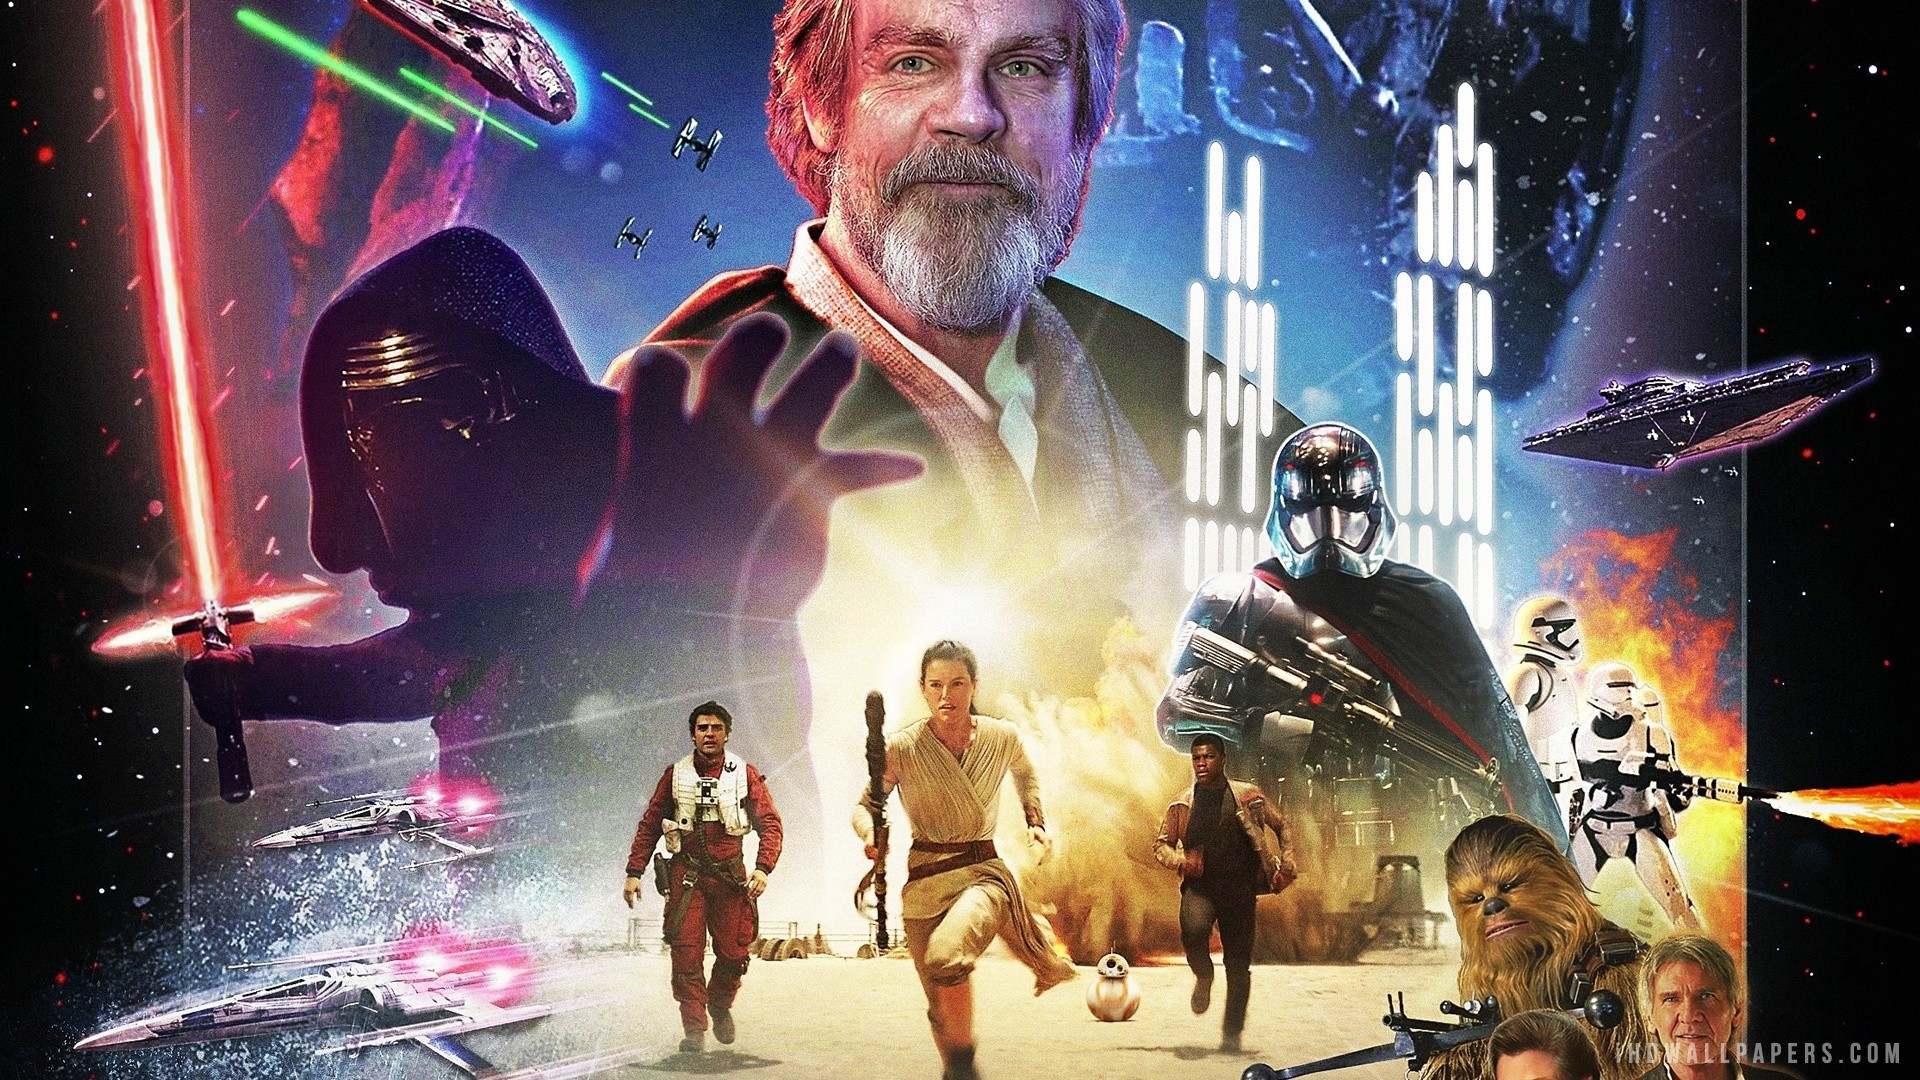 star wars the force awakens full movie online free